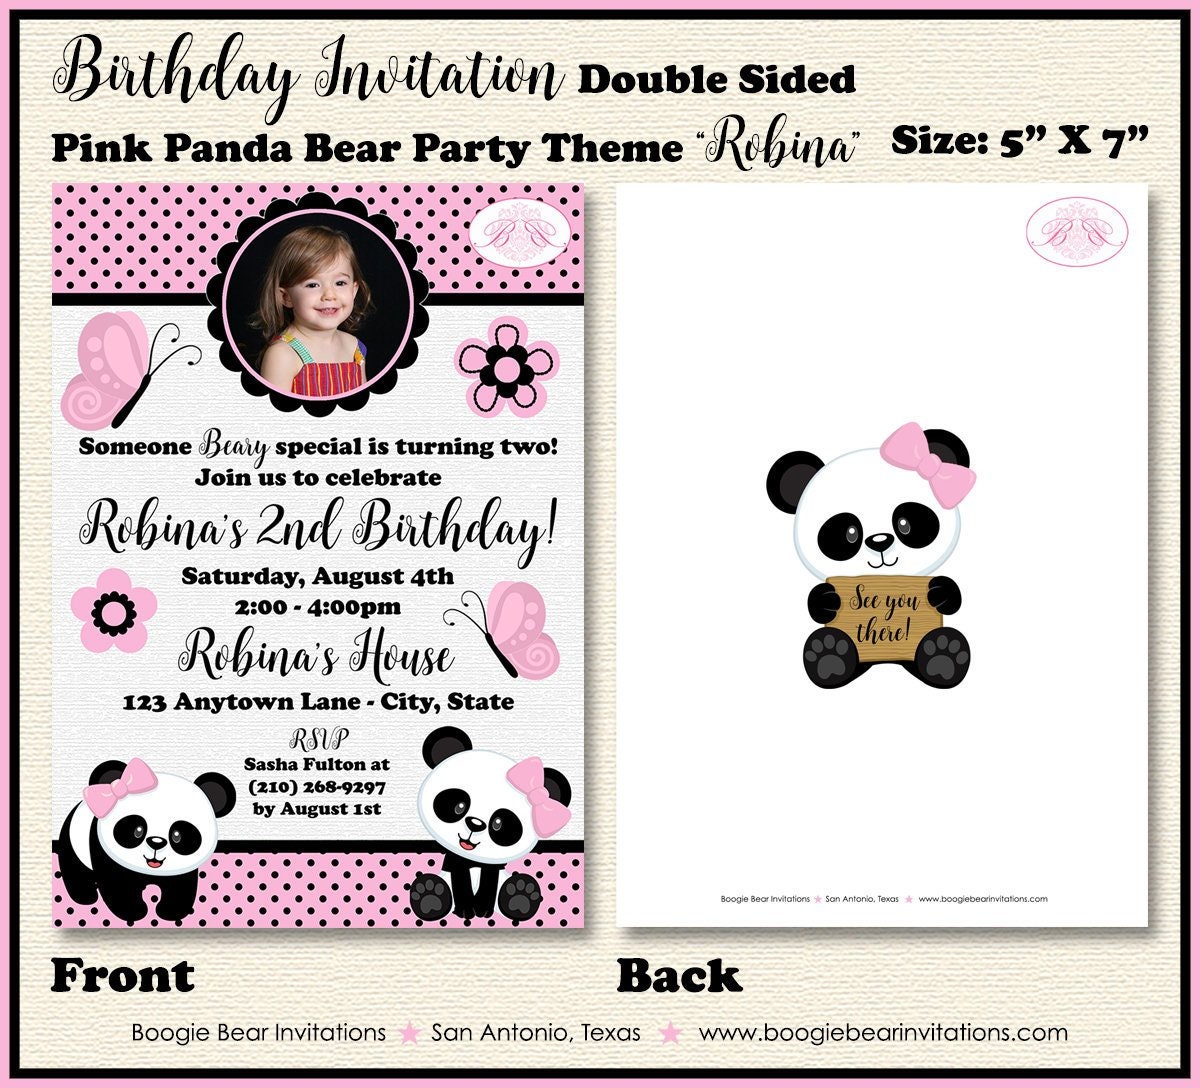 Pink Panda Bear Birthday Party Invitation Photo Girl Butterfly Wild Zoo Dot Boogie Bear Invitations Robina Theme Paperless Printable Printed